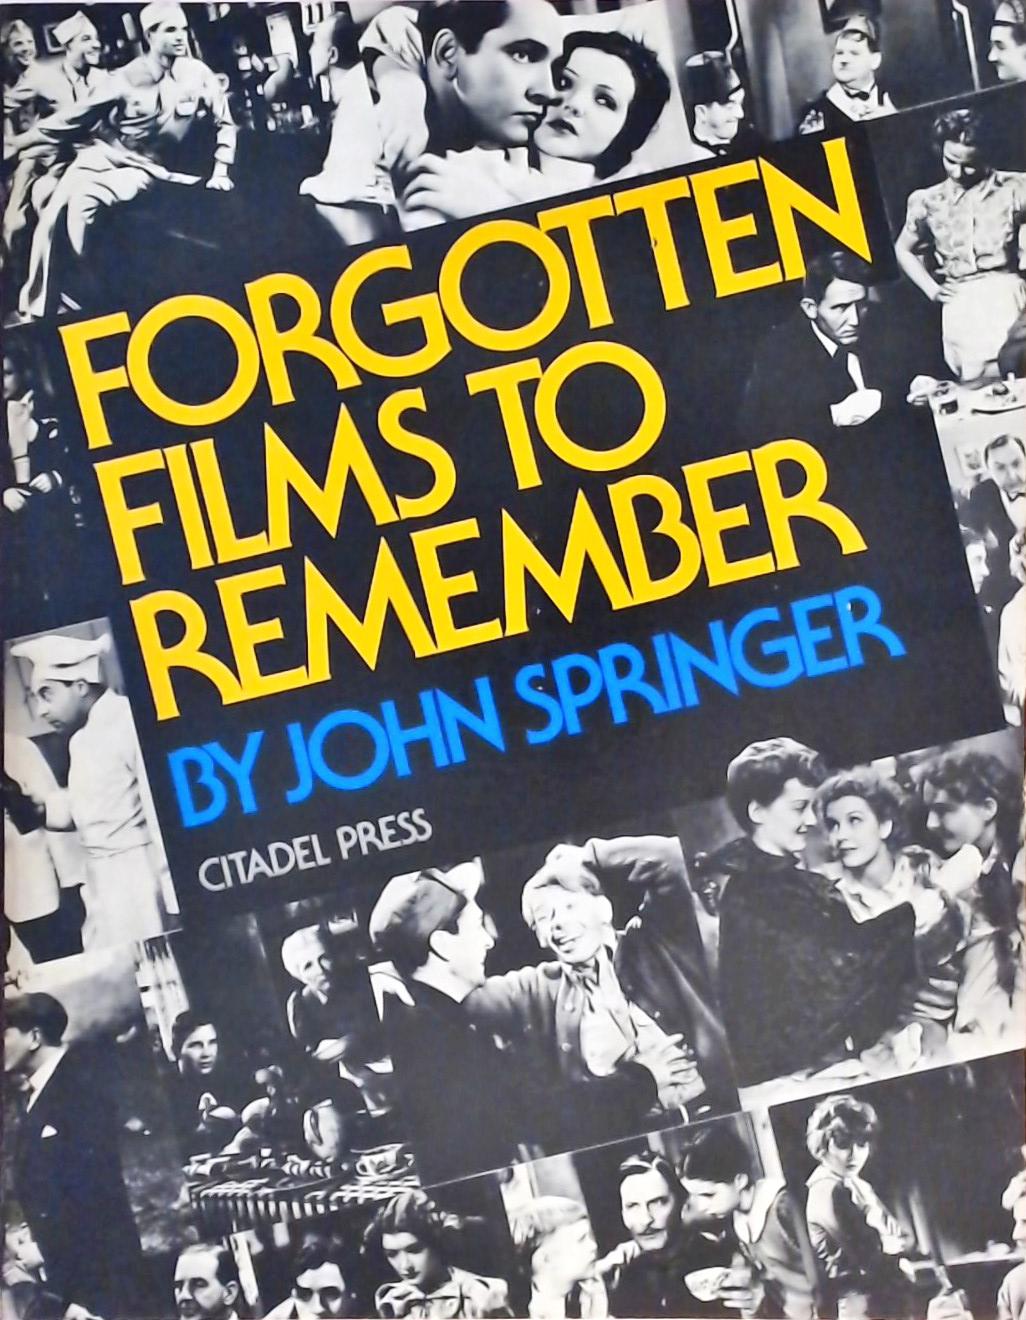 Forgotten Films to Remenber